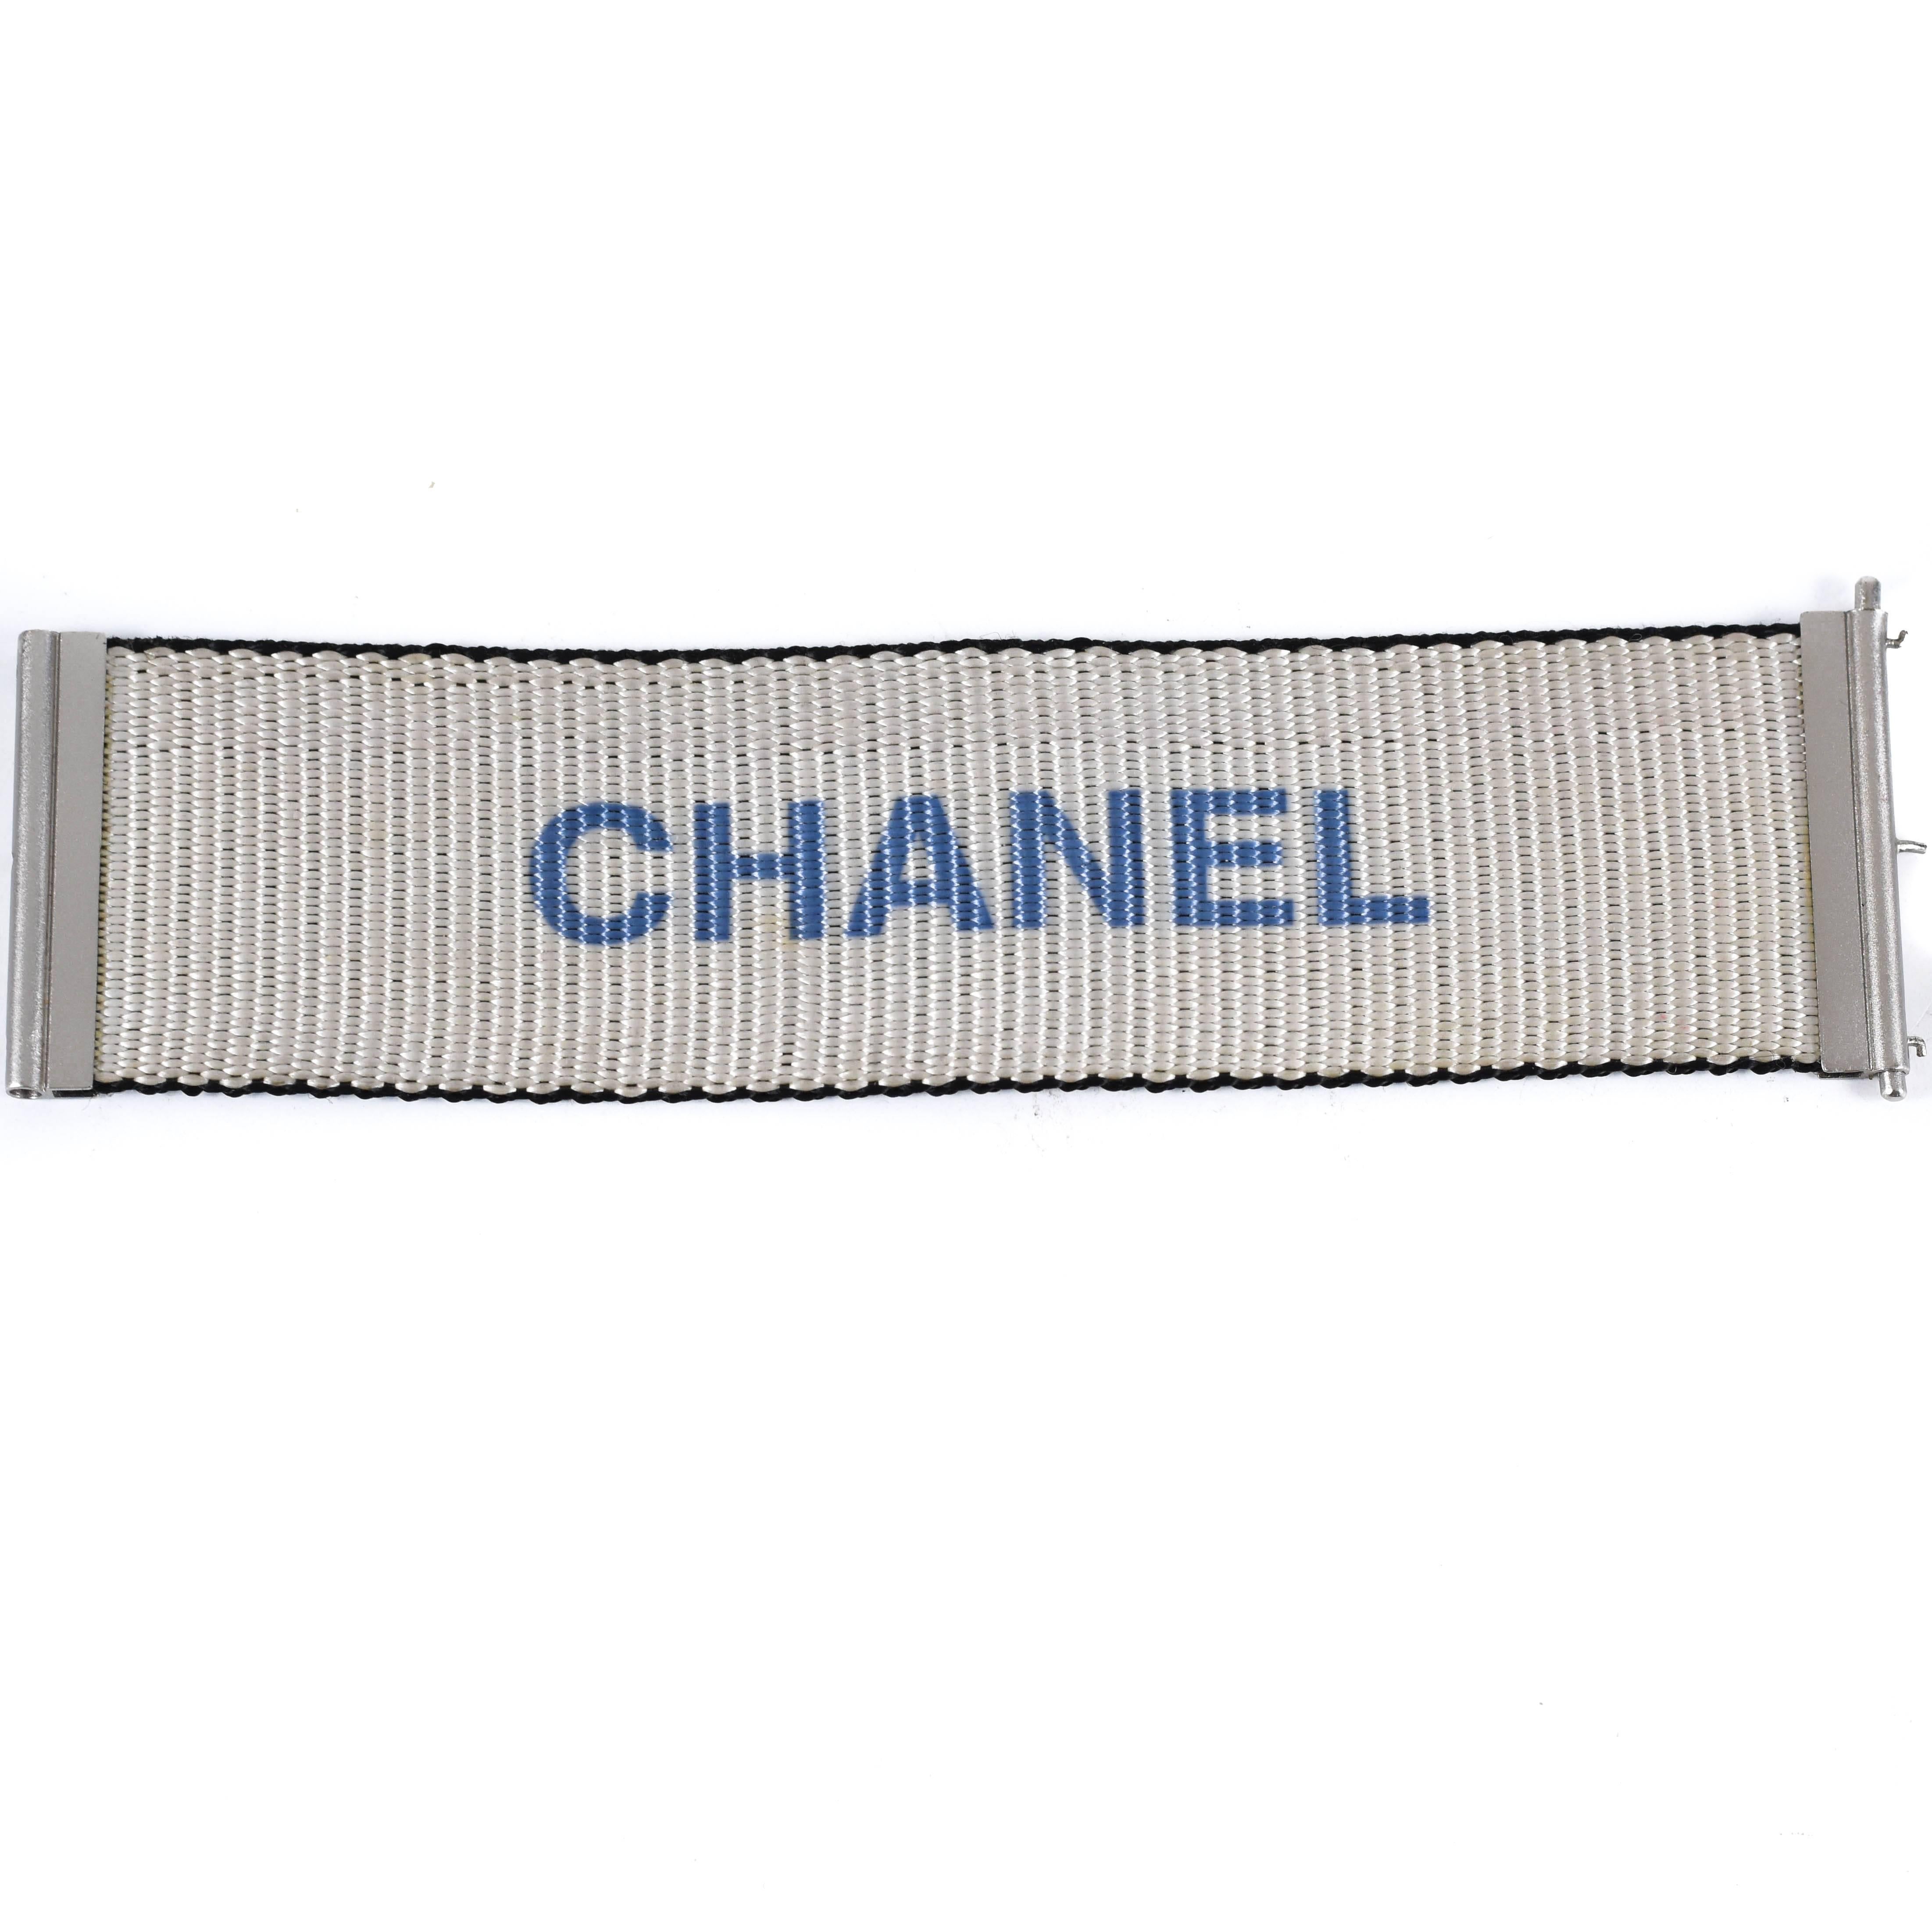 Chanel - Rare Logo Cuff Bracelet

Color: Silver / Blue

Material: Nylon

------------------------------------------------------------
 
Details:

- silver tone hardware

- blue woven chanel logo at front

- slide lock closure

-